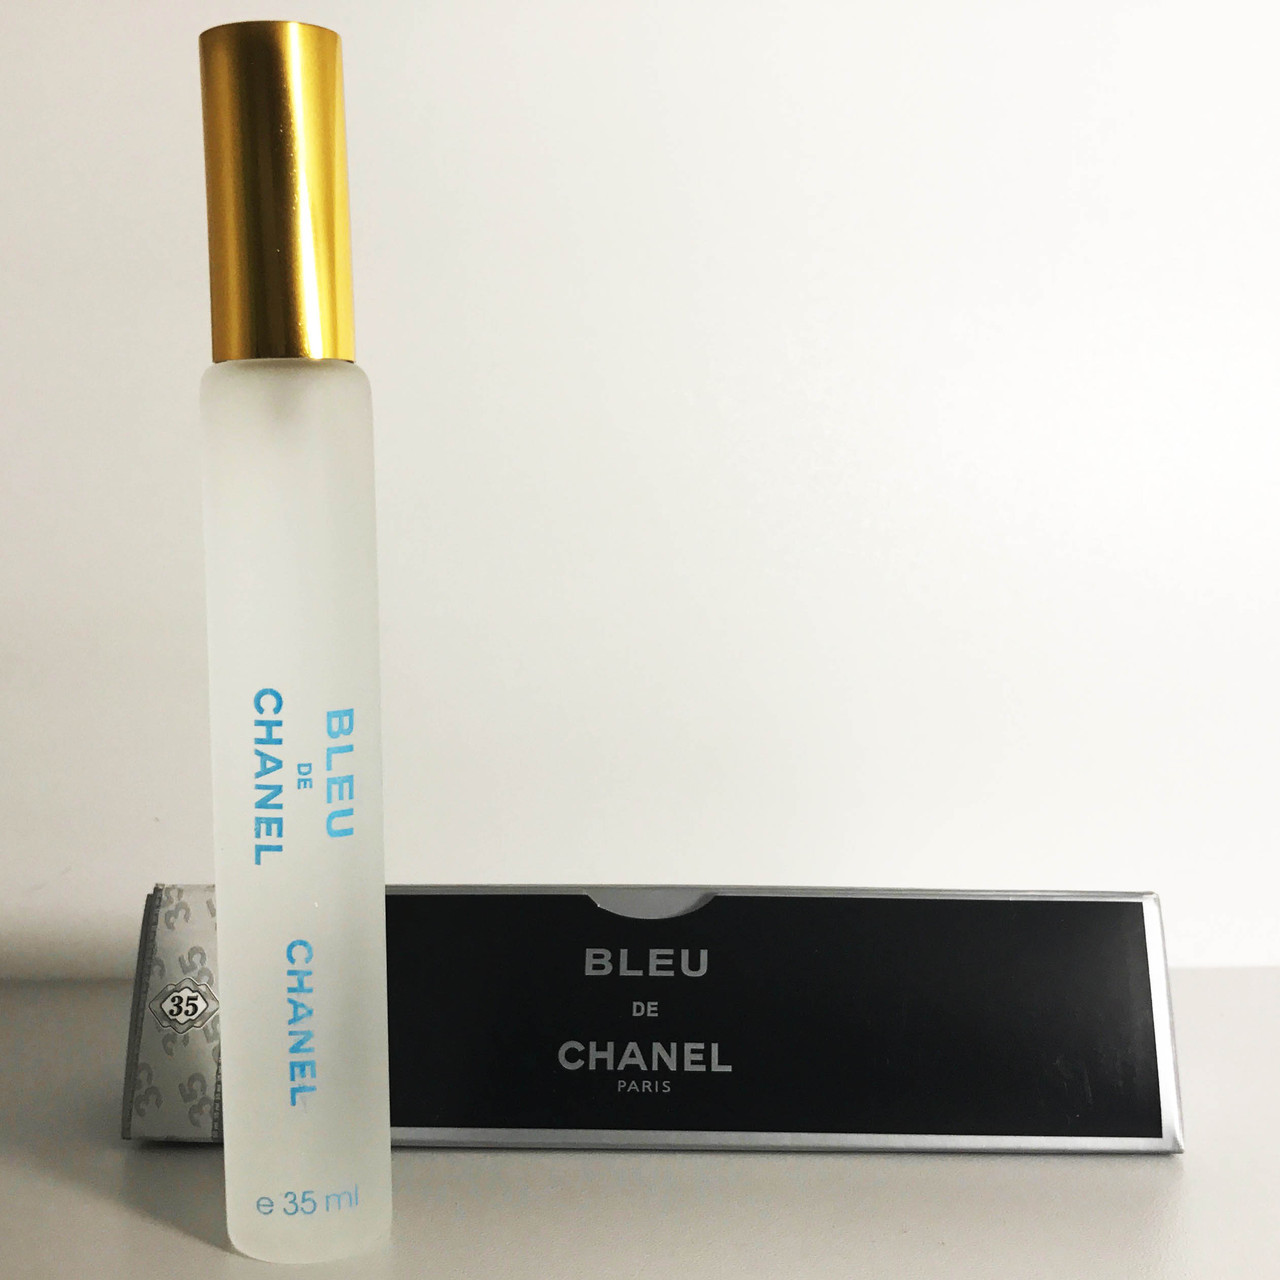 Chanel Bleu De Chanel для мужчин (35 ml) дорожный флакон, пробник-ручка (копия)